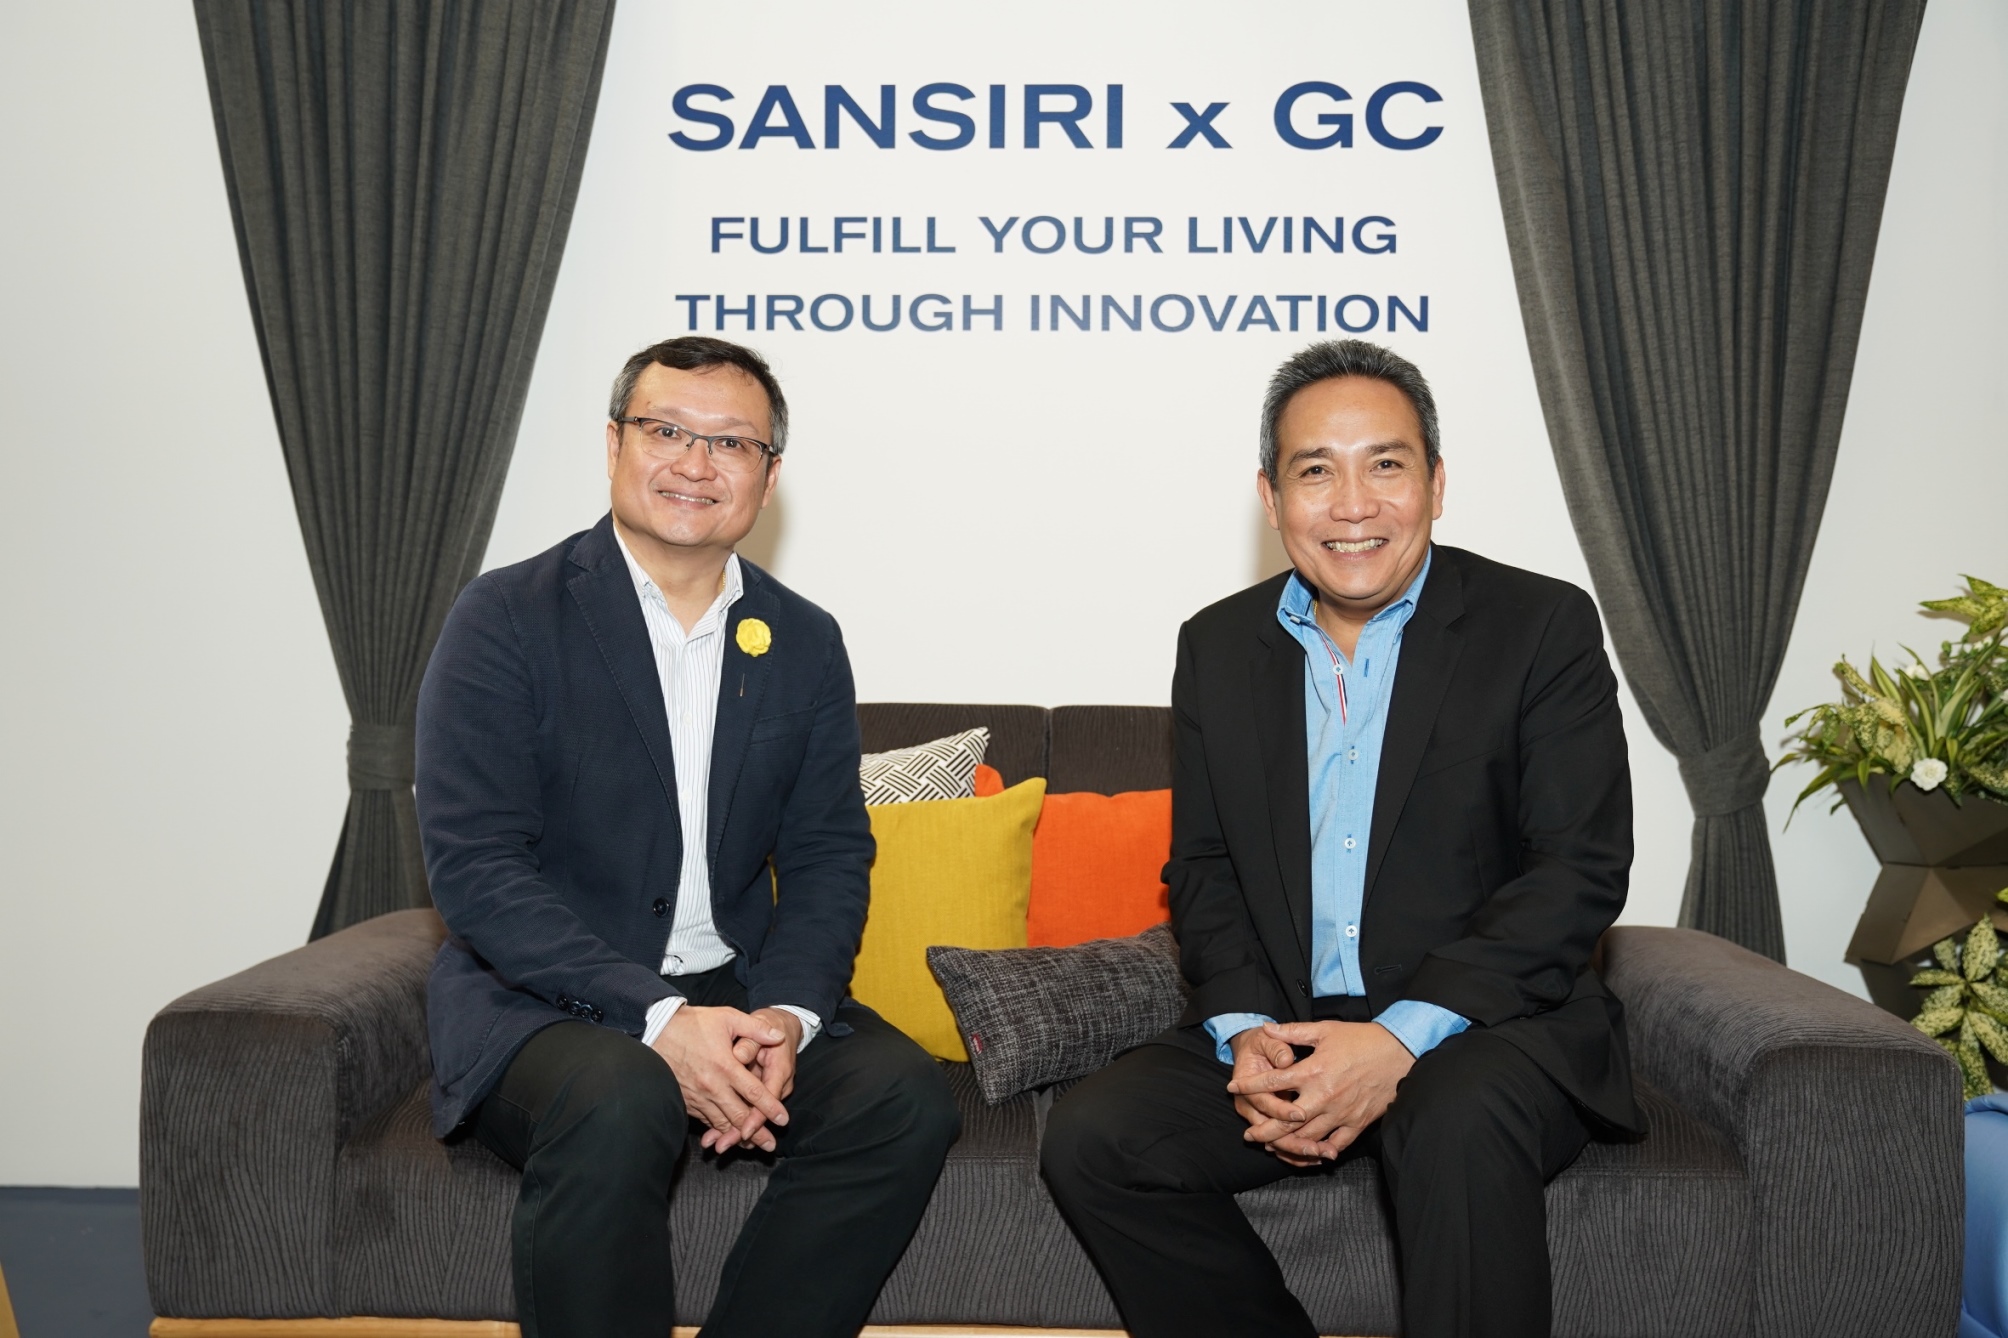 SANSIRI x GC TO BUILD THAILAND’S FIRST ‘GREEN SOCIETY’ BOLSTERING ITS LEADERSHIP IN CIRCULAR LIVING